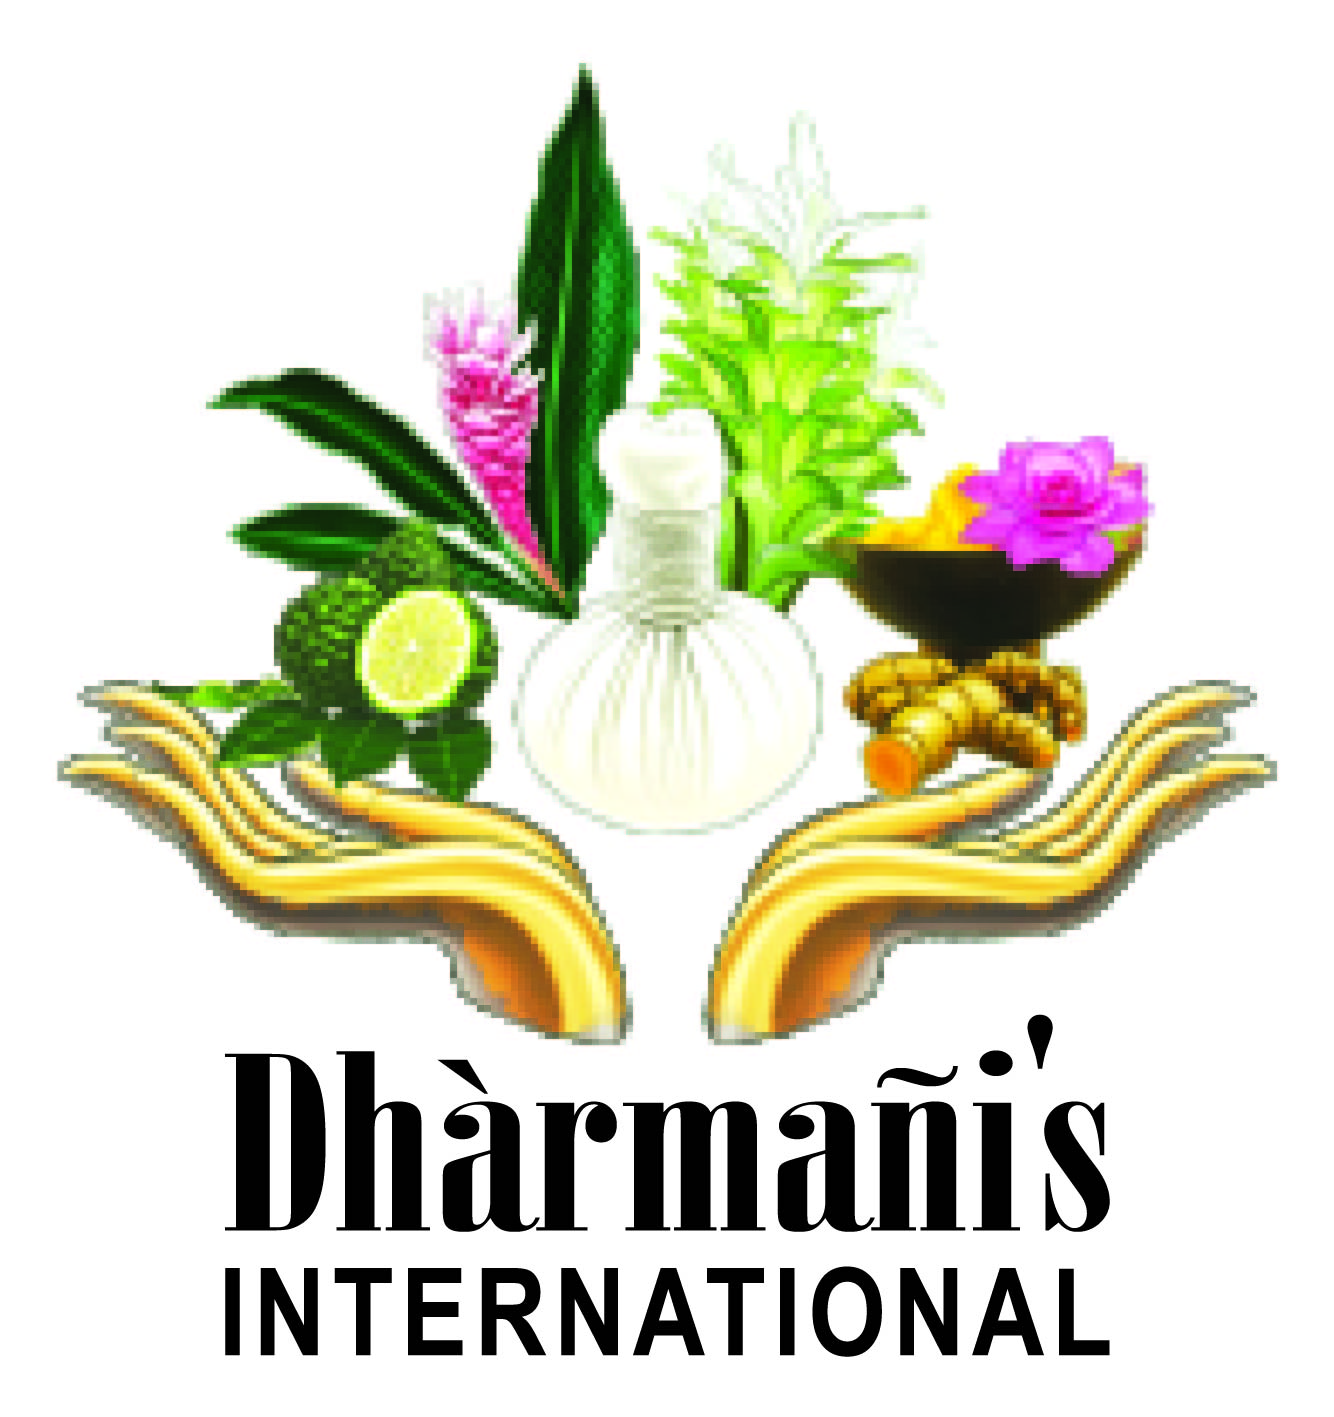 Dharmanis International